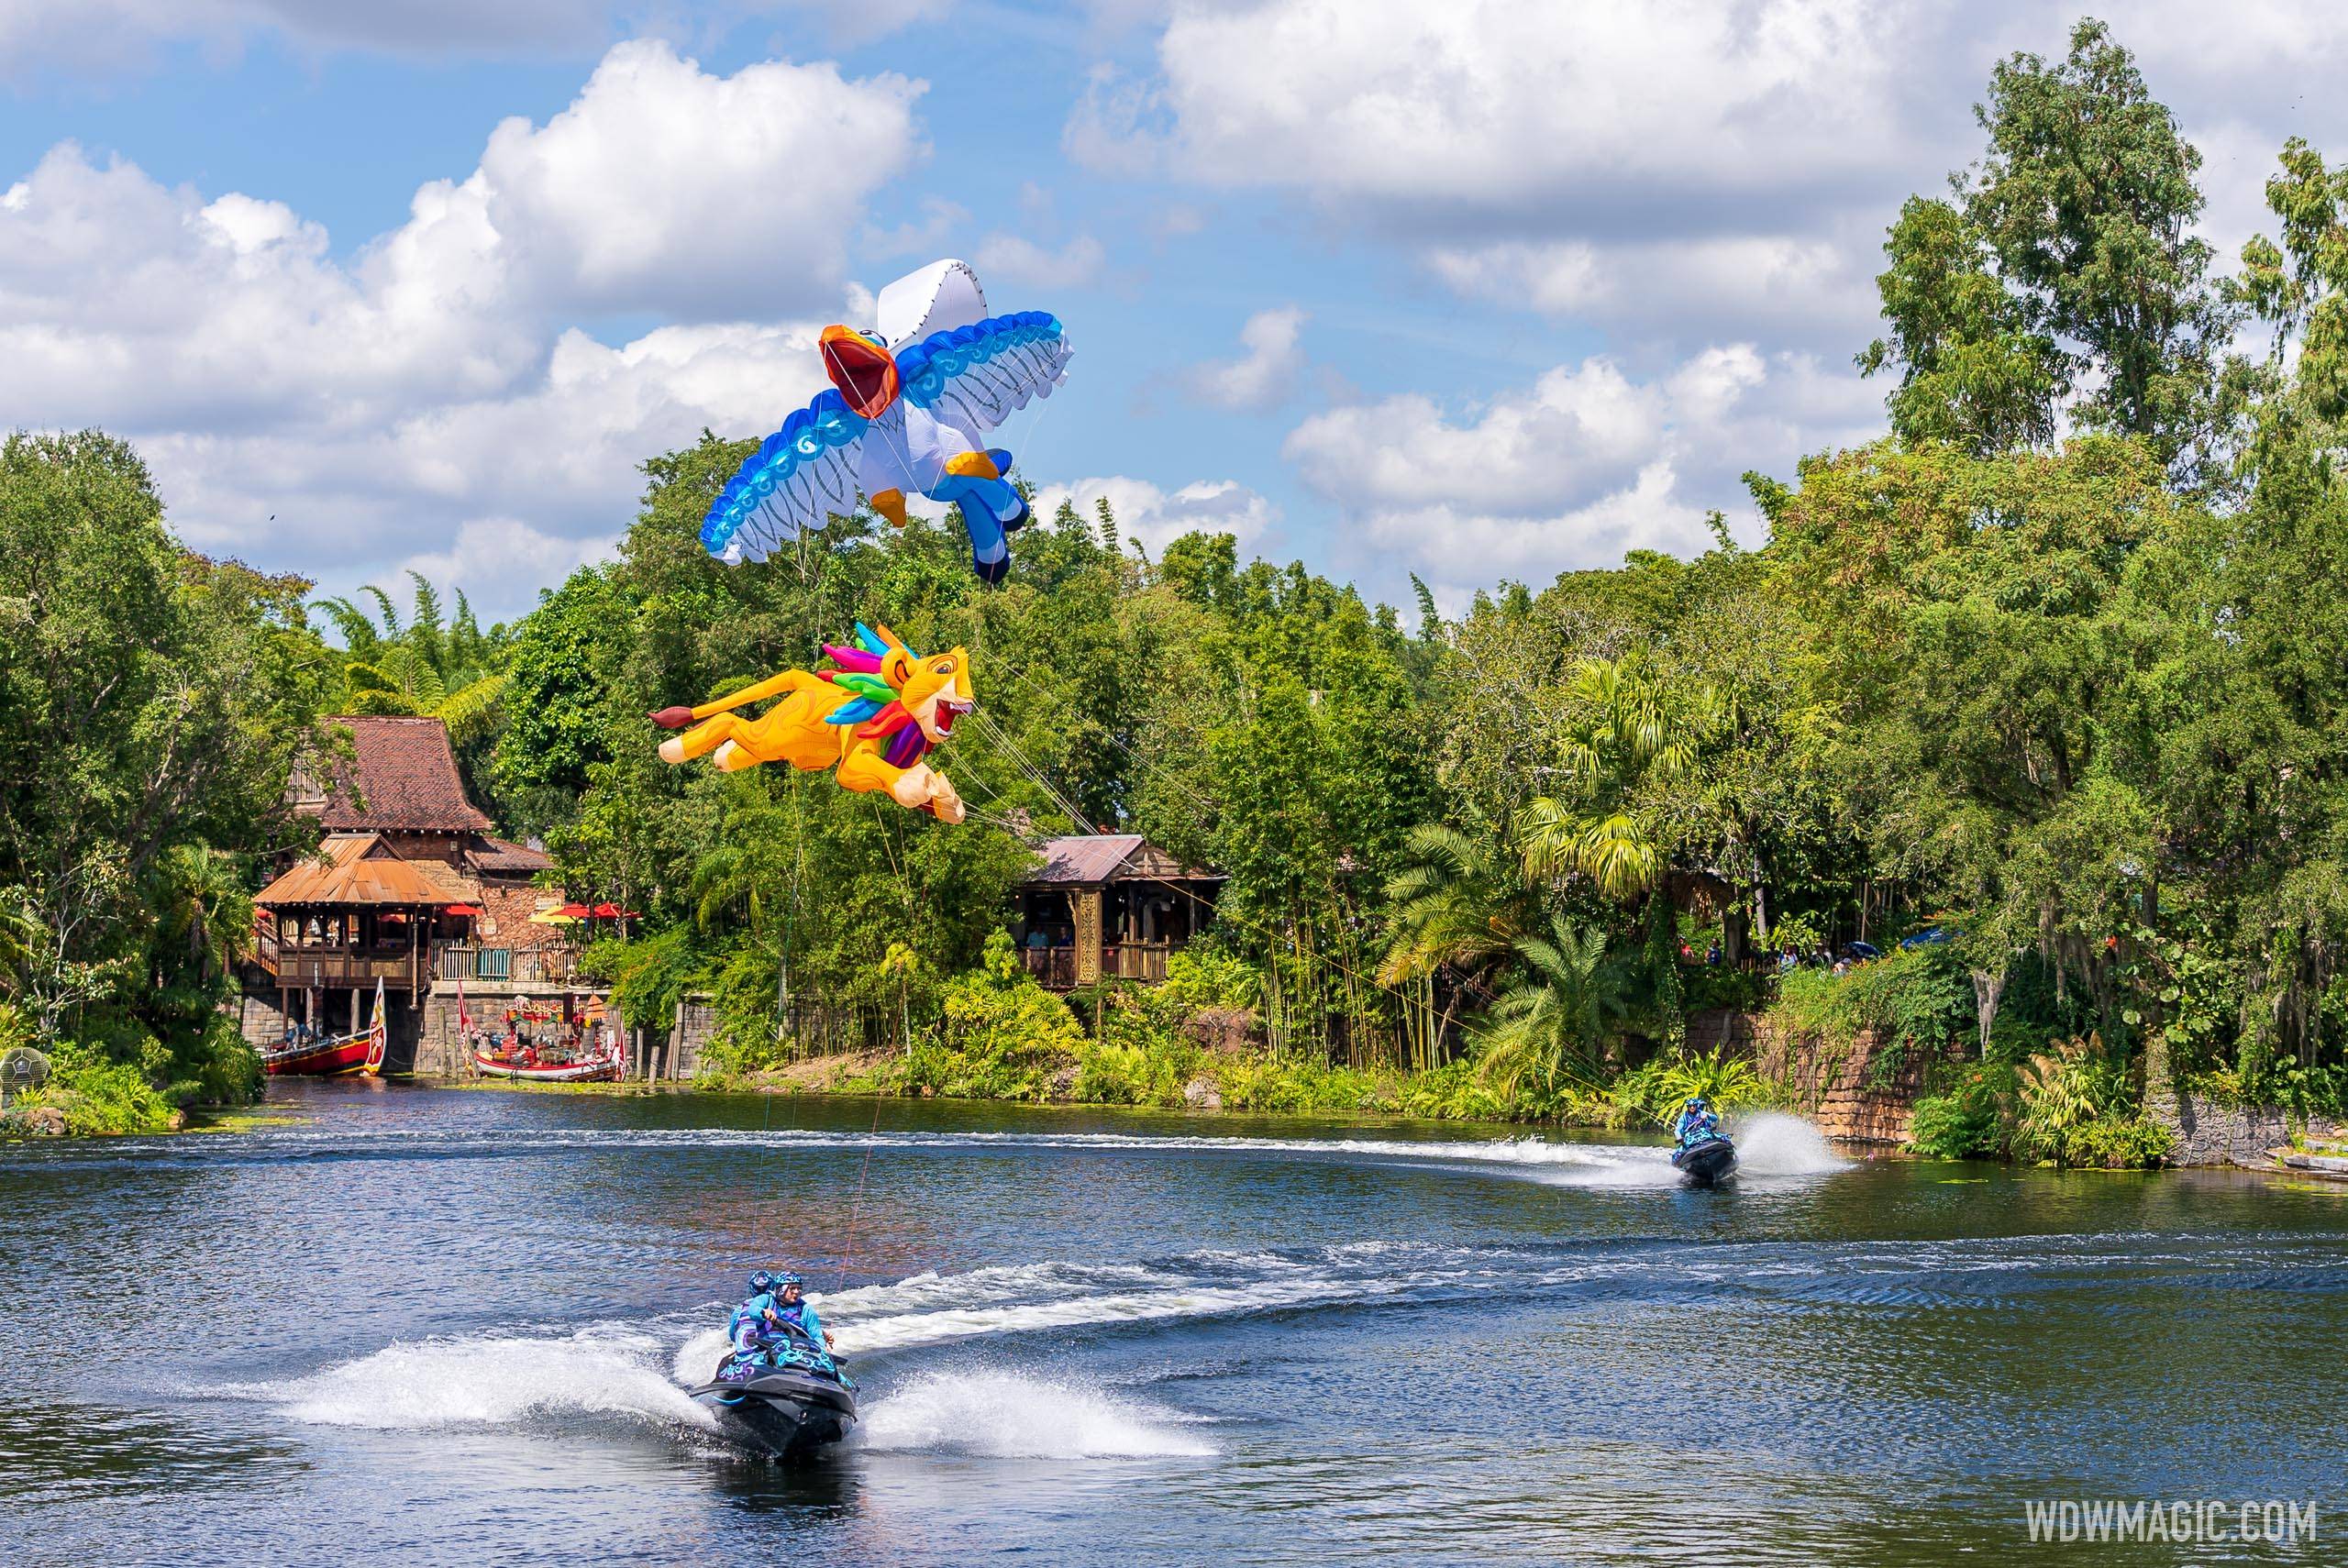 Disney KiteTails at Disney's Animal Kingdom to permanently close